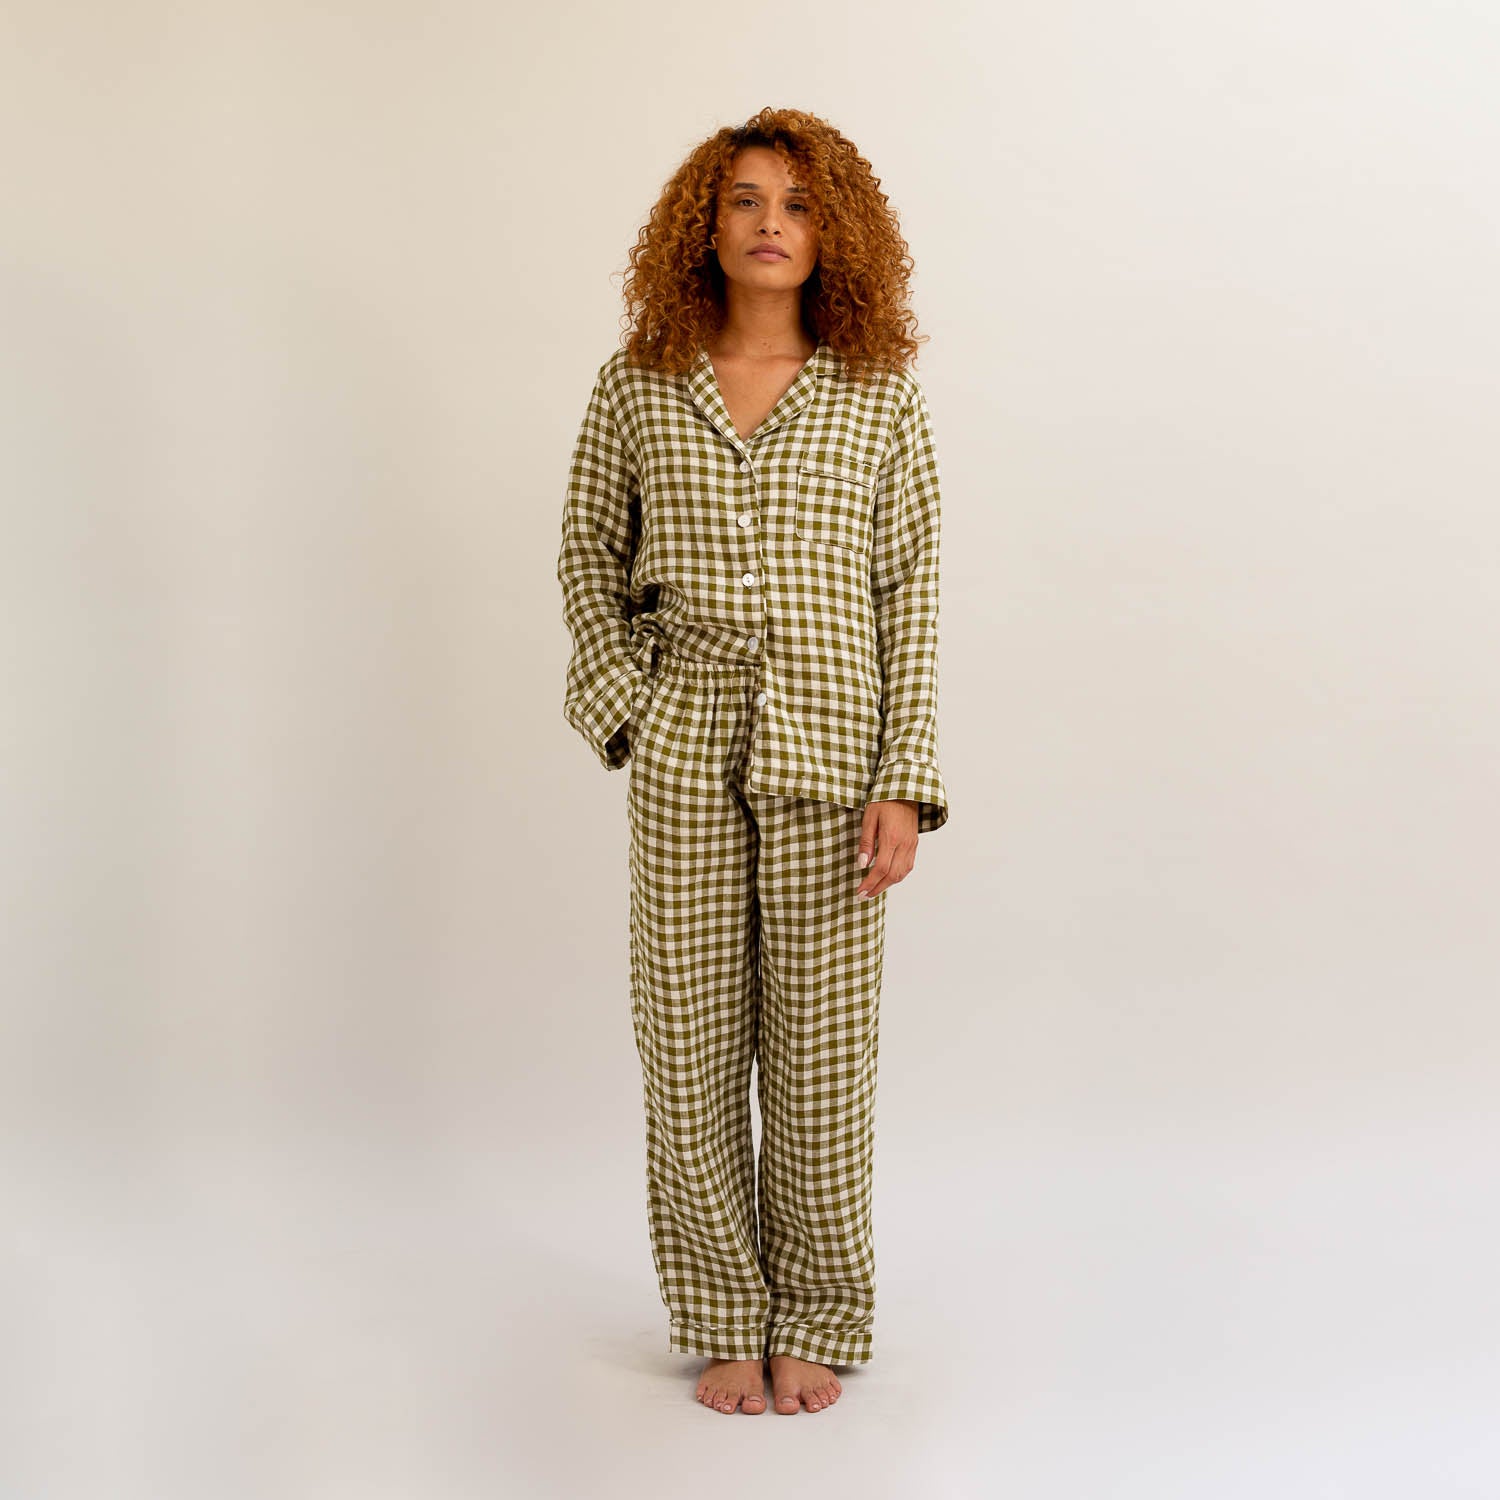 Botanical Green Gingham Linen Pyjama Trouser Set - Piglet in Bed